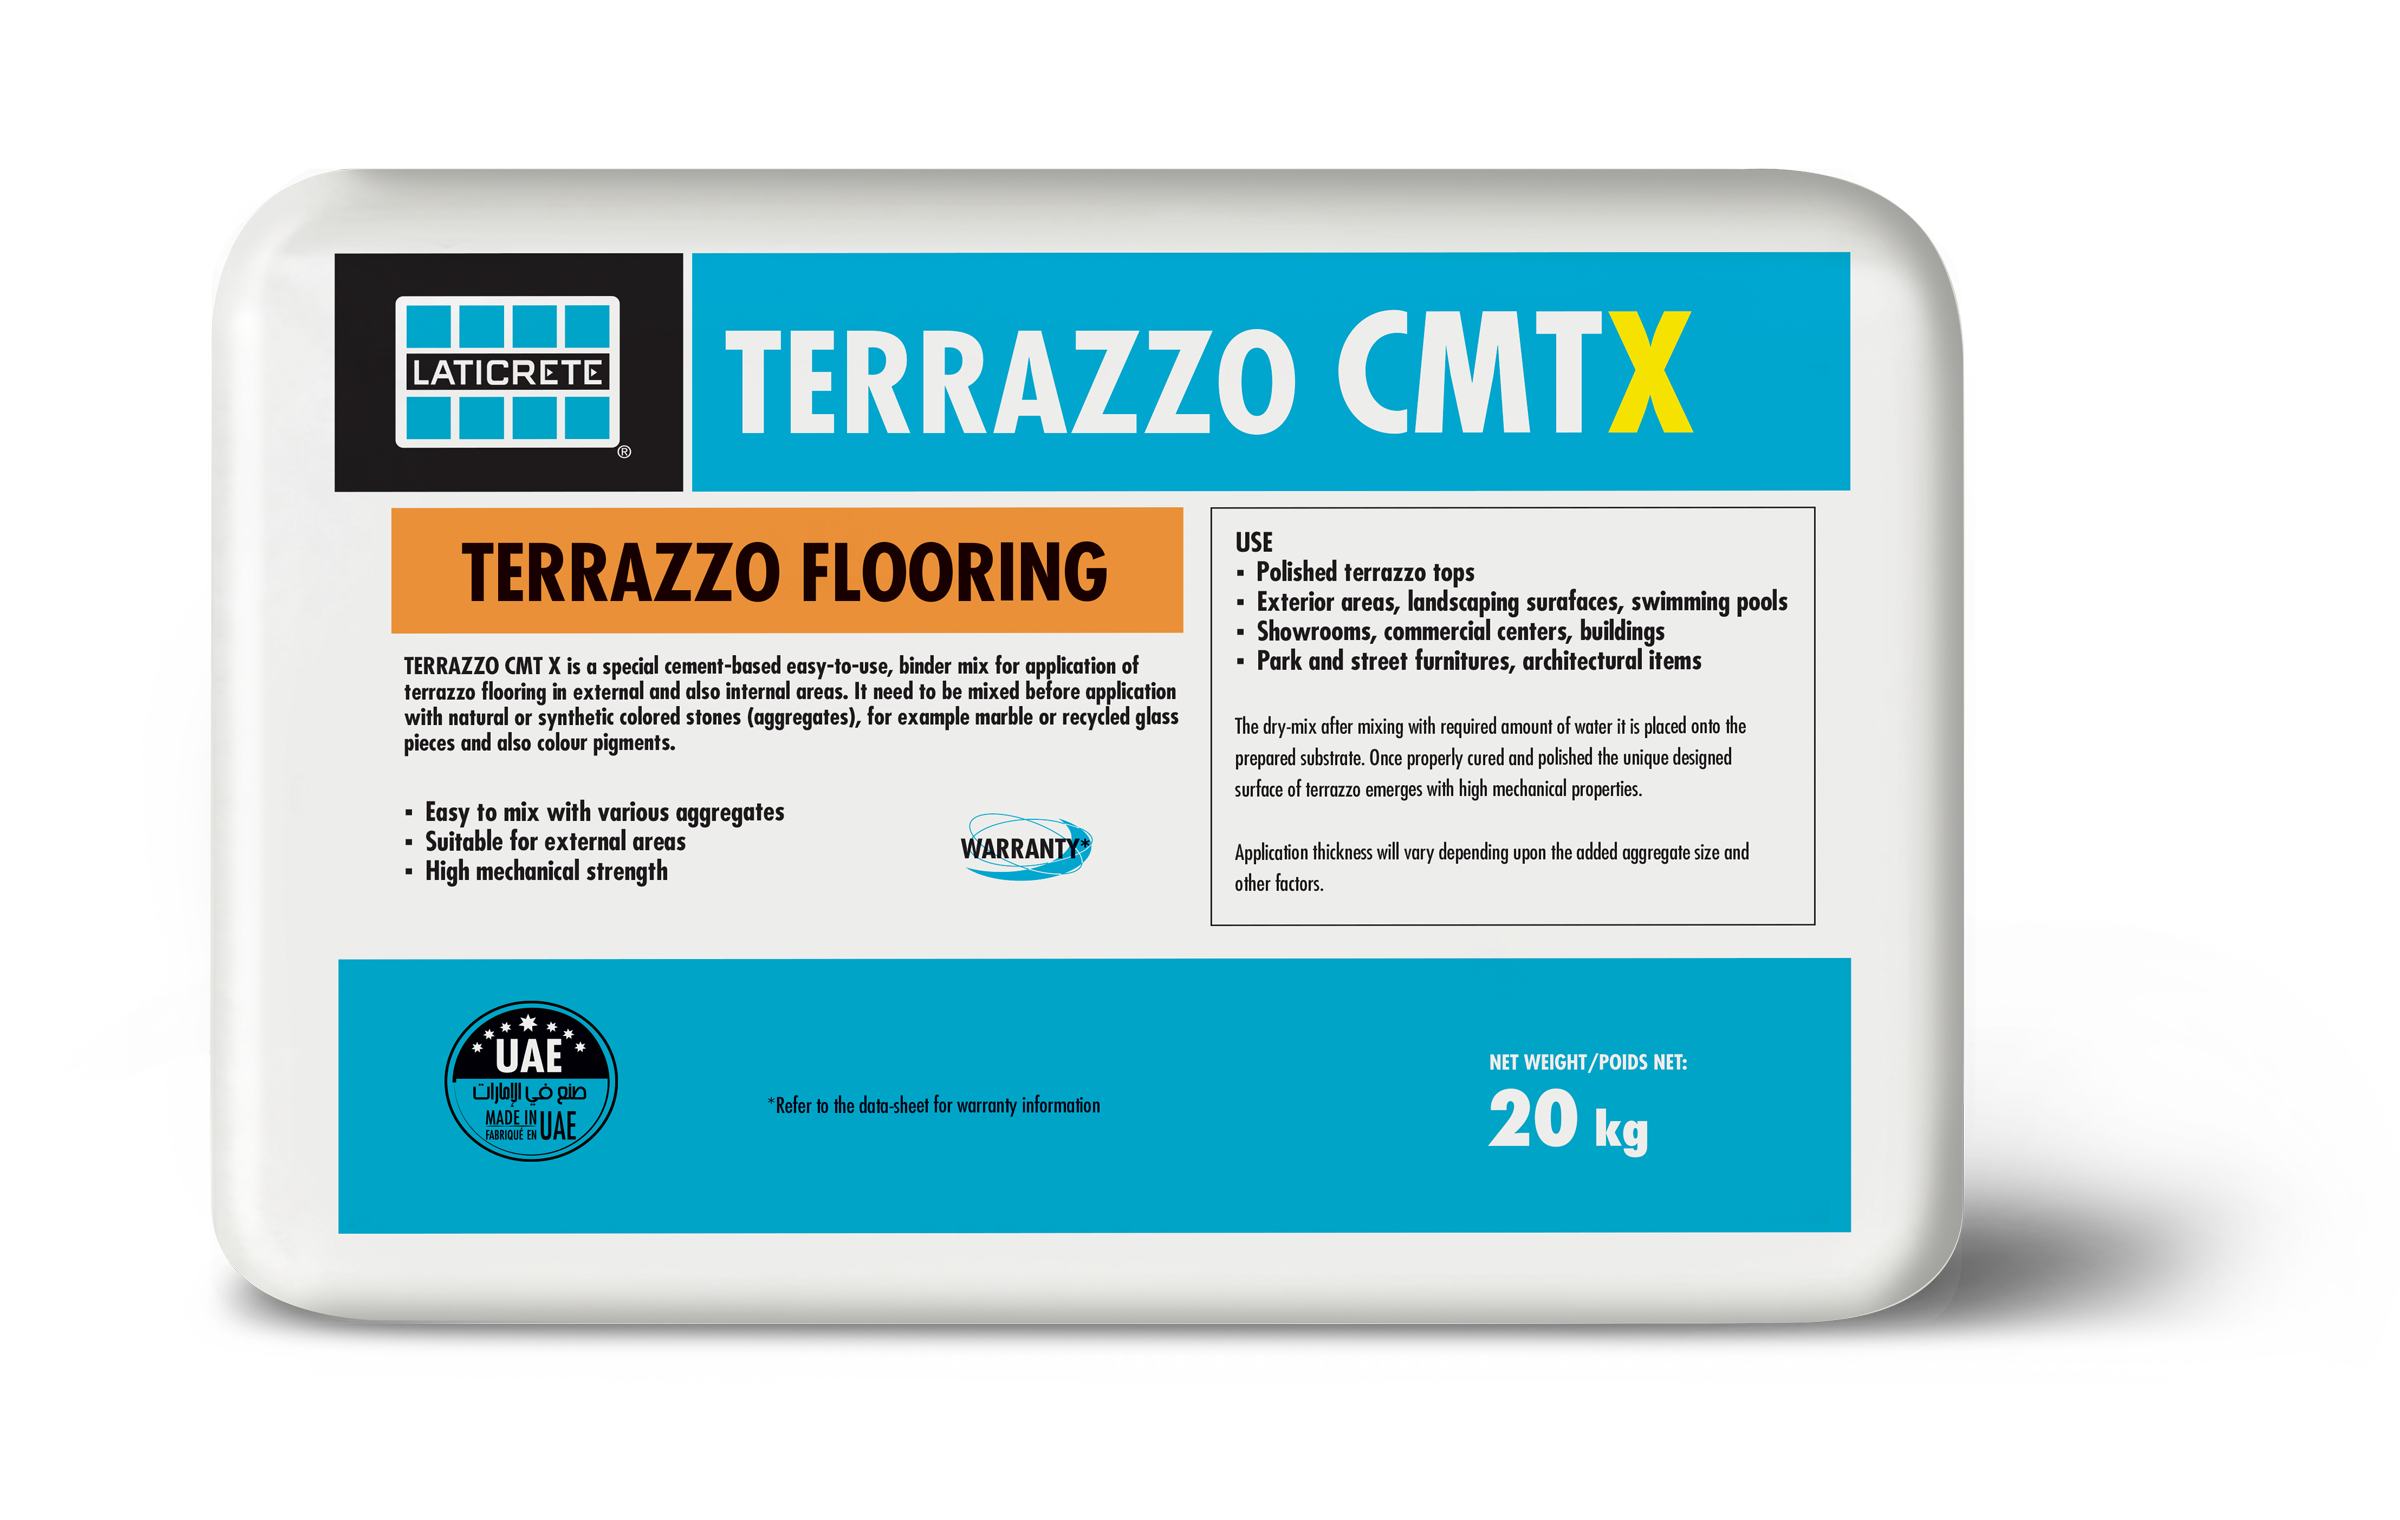 Terrazzo CMTX